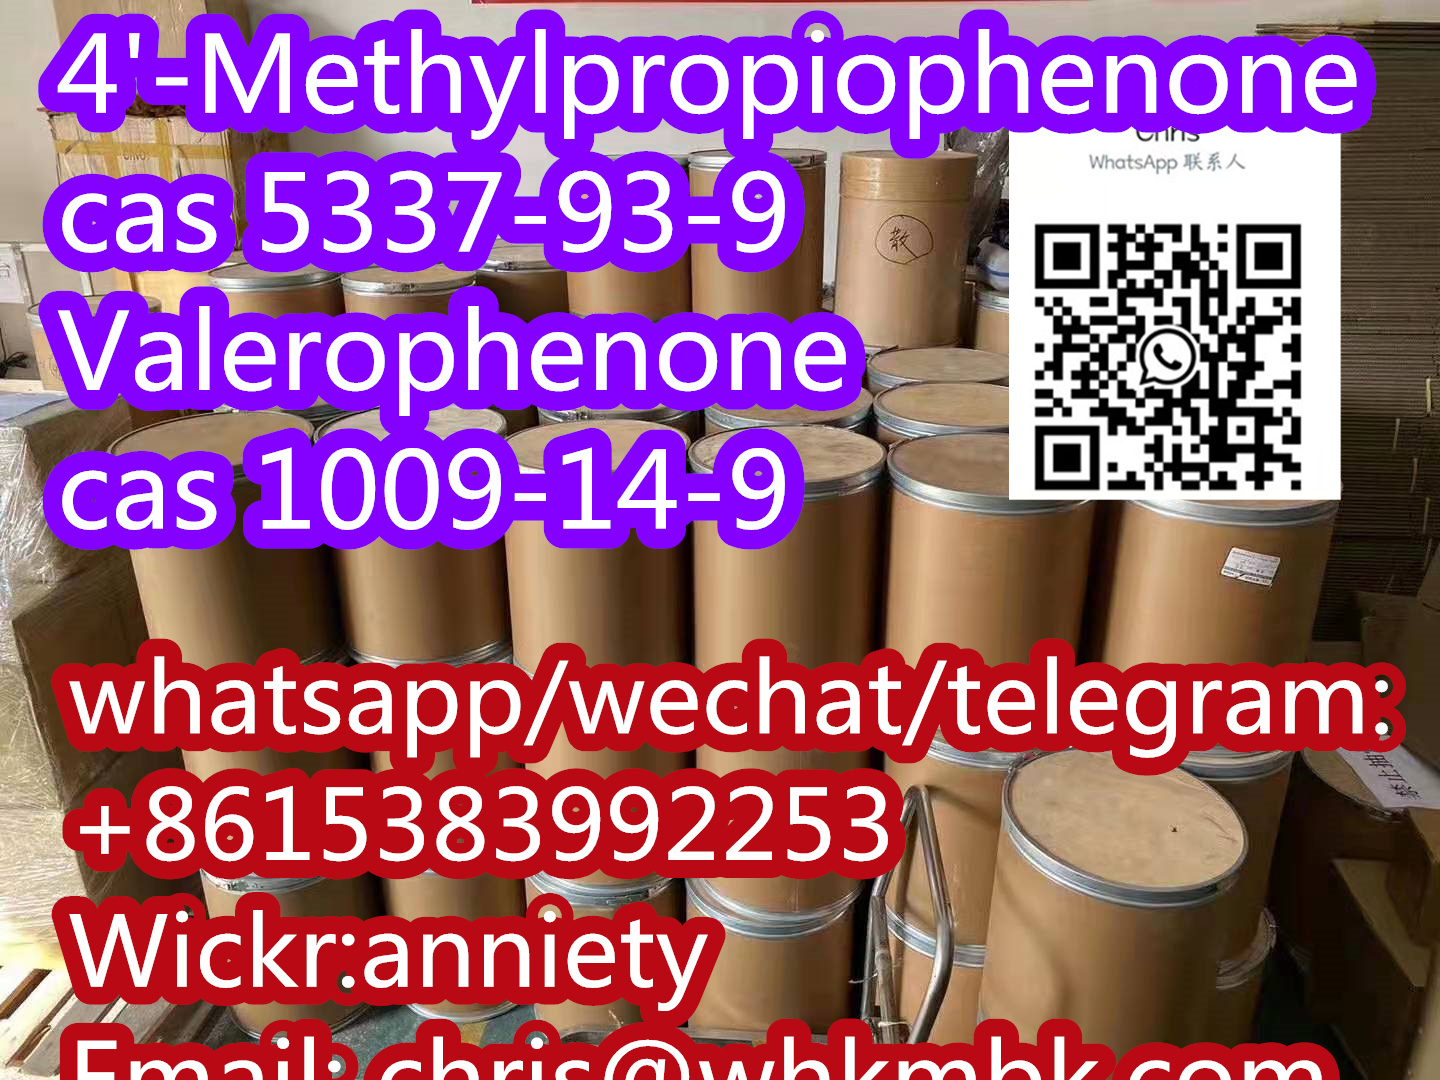  wickr: anniety 4'-Methylpropiophenone cas 5337-93-9 Valerophenone cas 1009-14-9 - photo